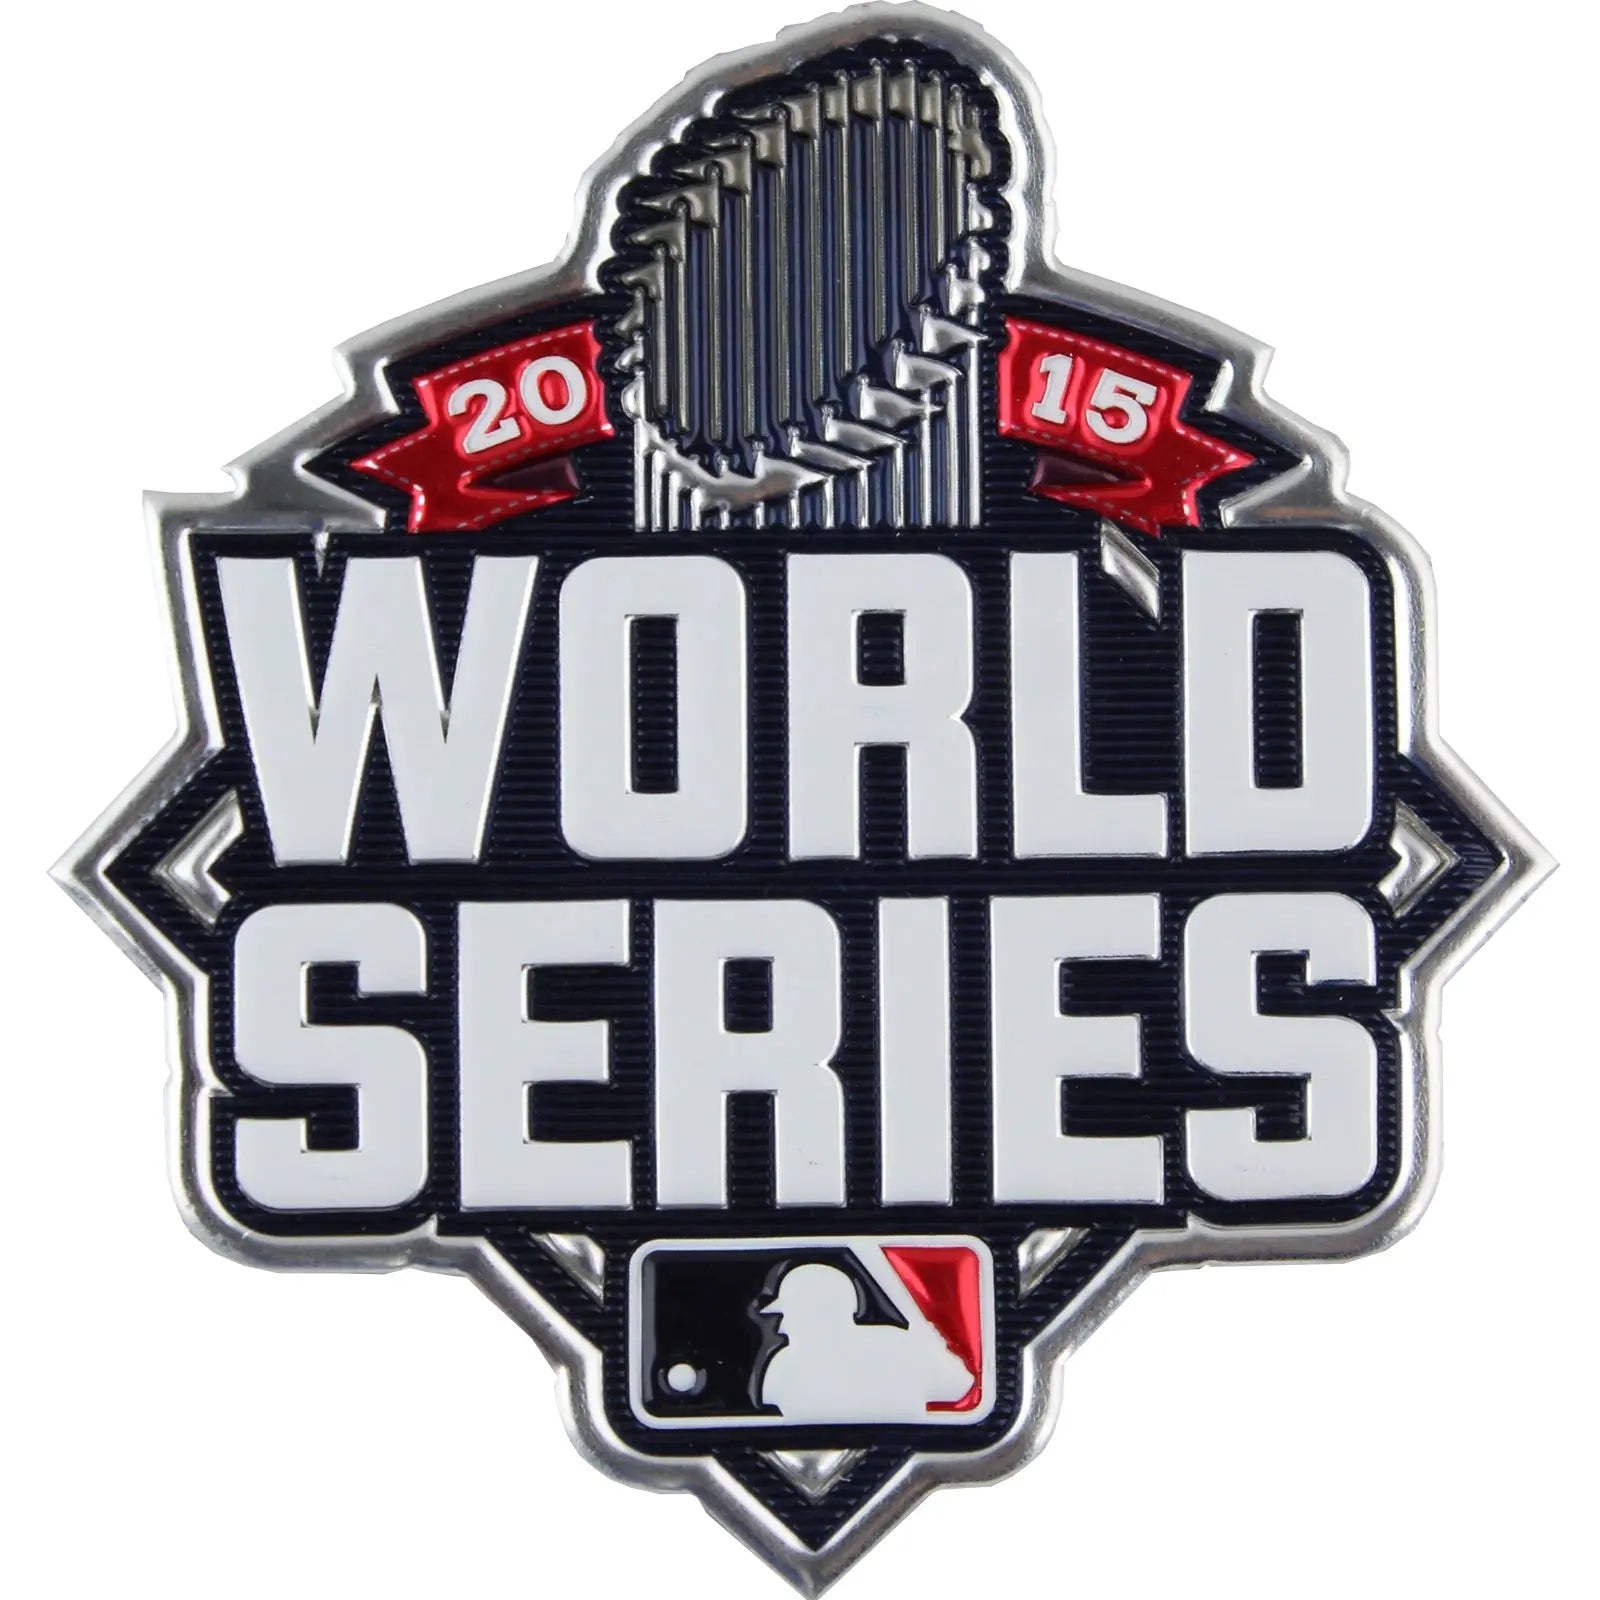 New York Yankees Gray Lilo & Stitch Baseball Jersey - Officially